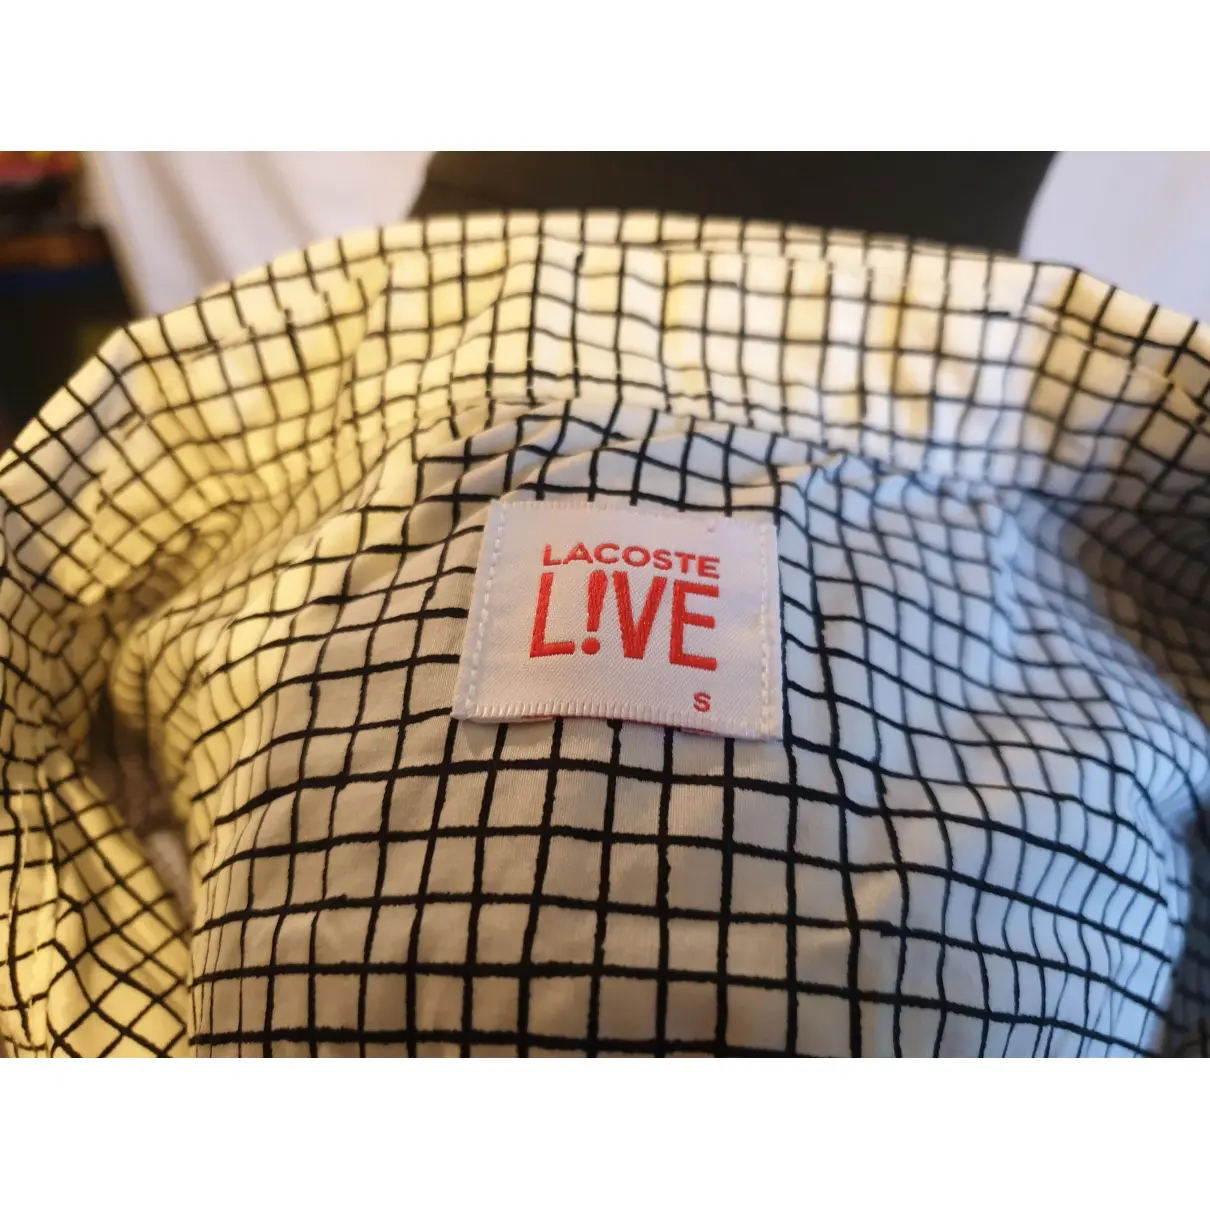 Buy Lacoste Live Shirt online